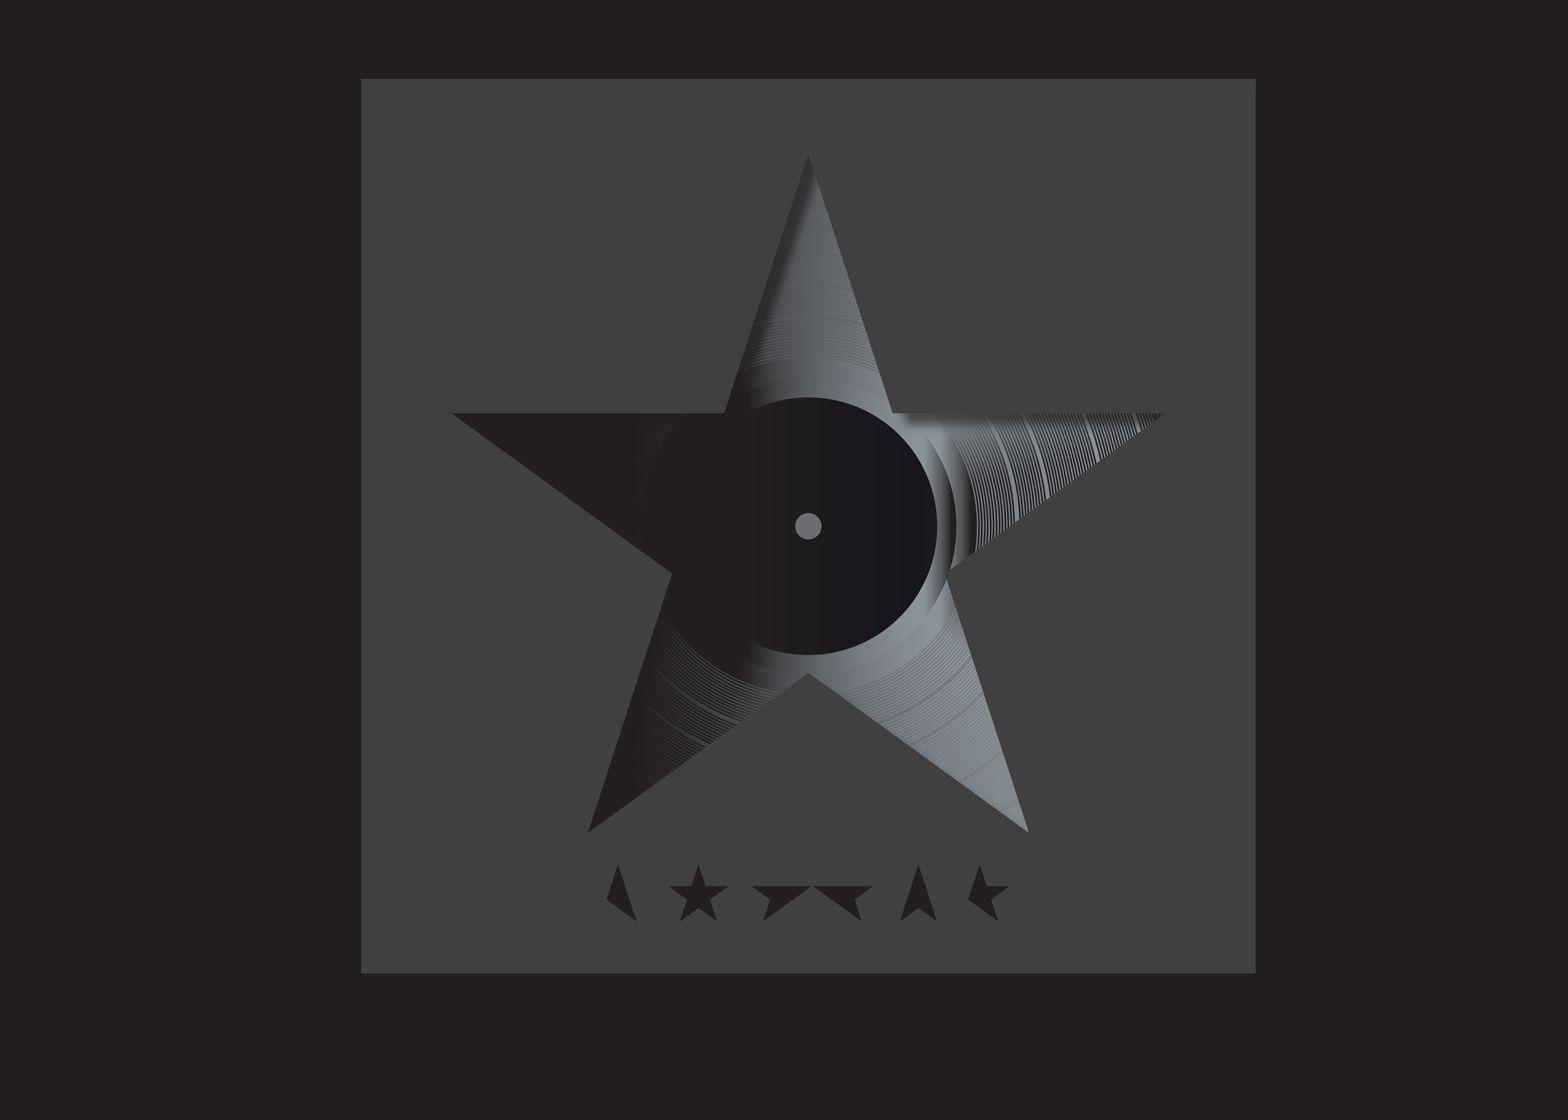 Black Star in Circle Logo - David Bowie was 